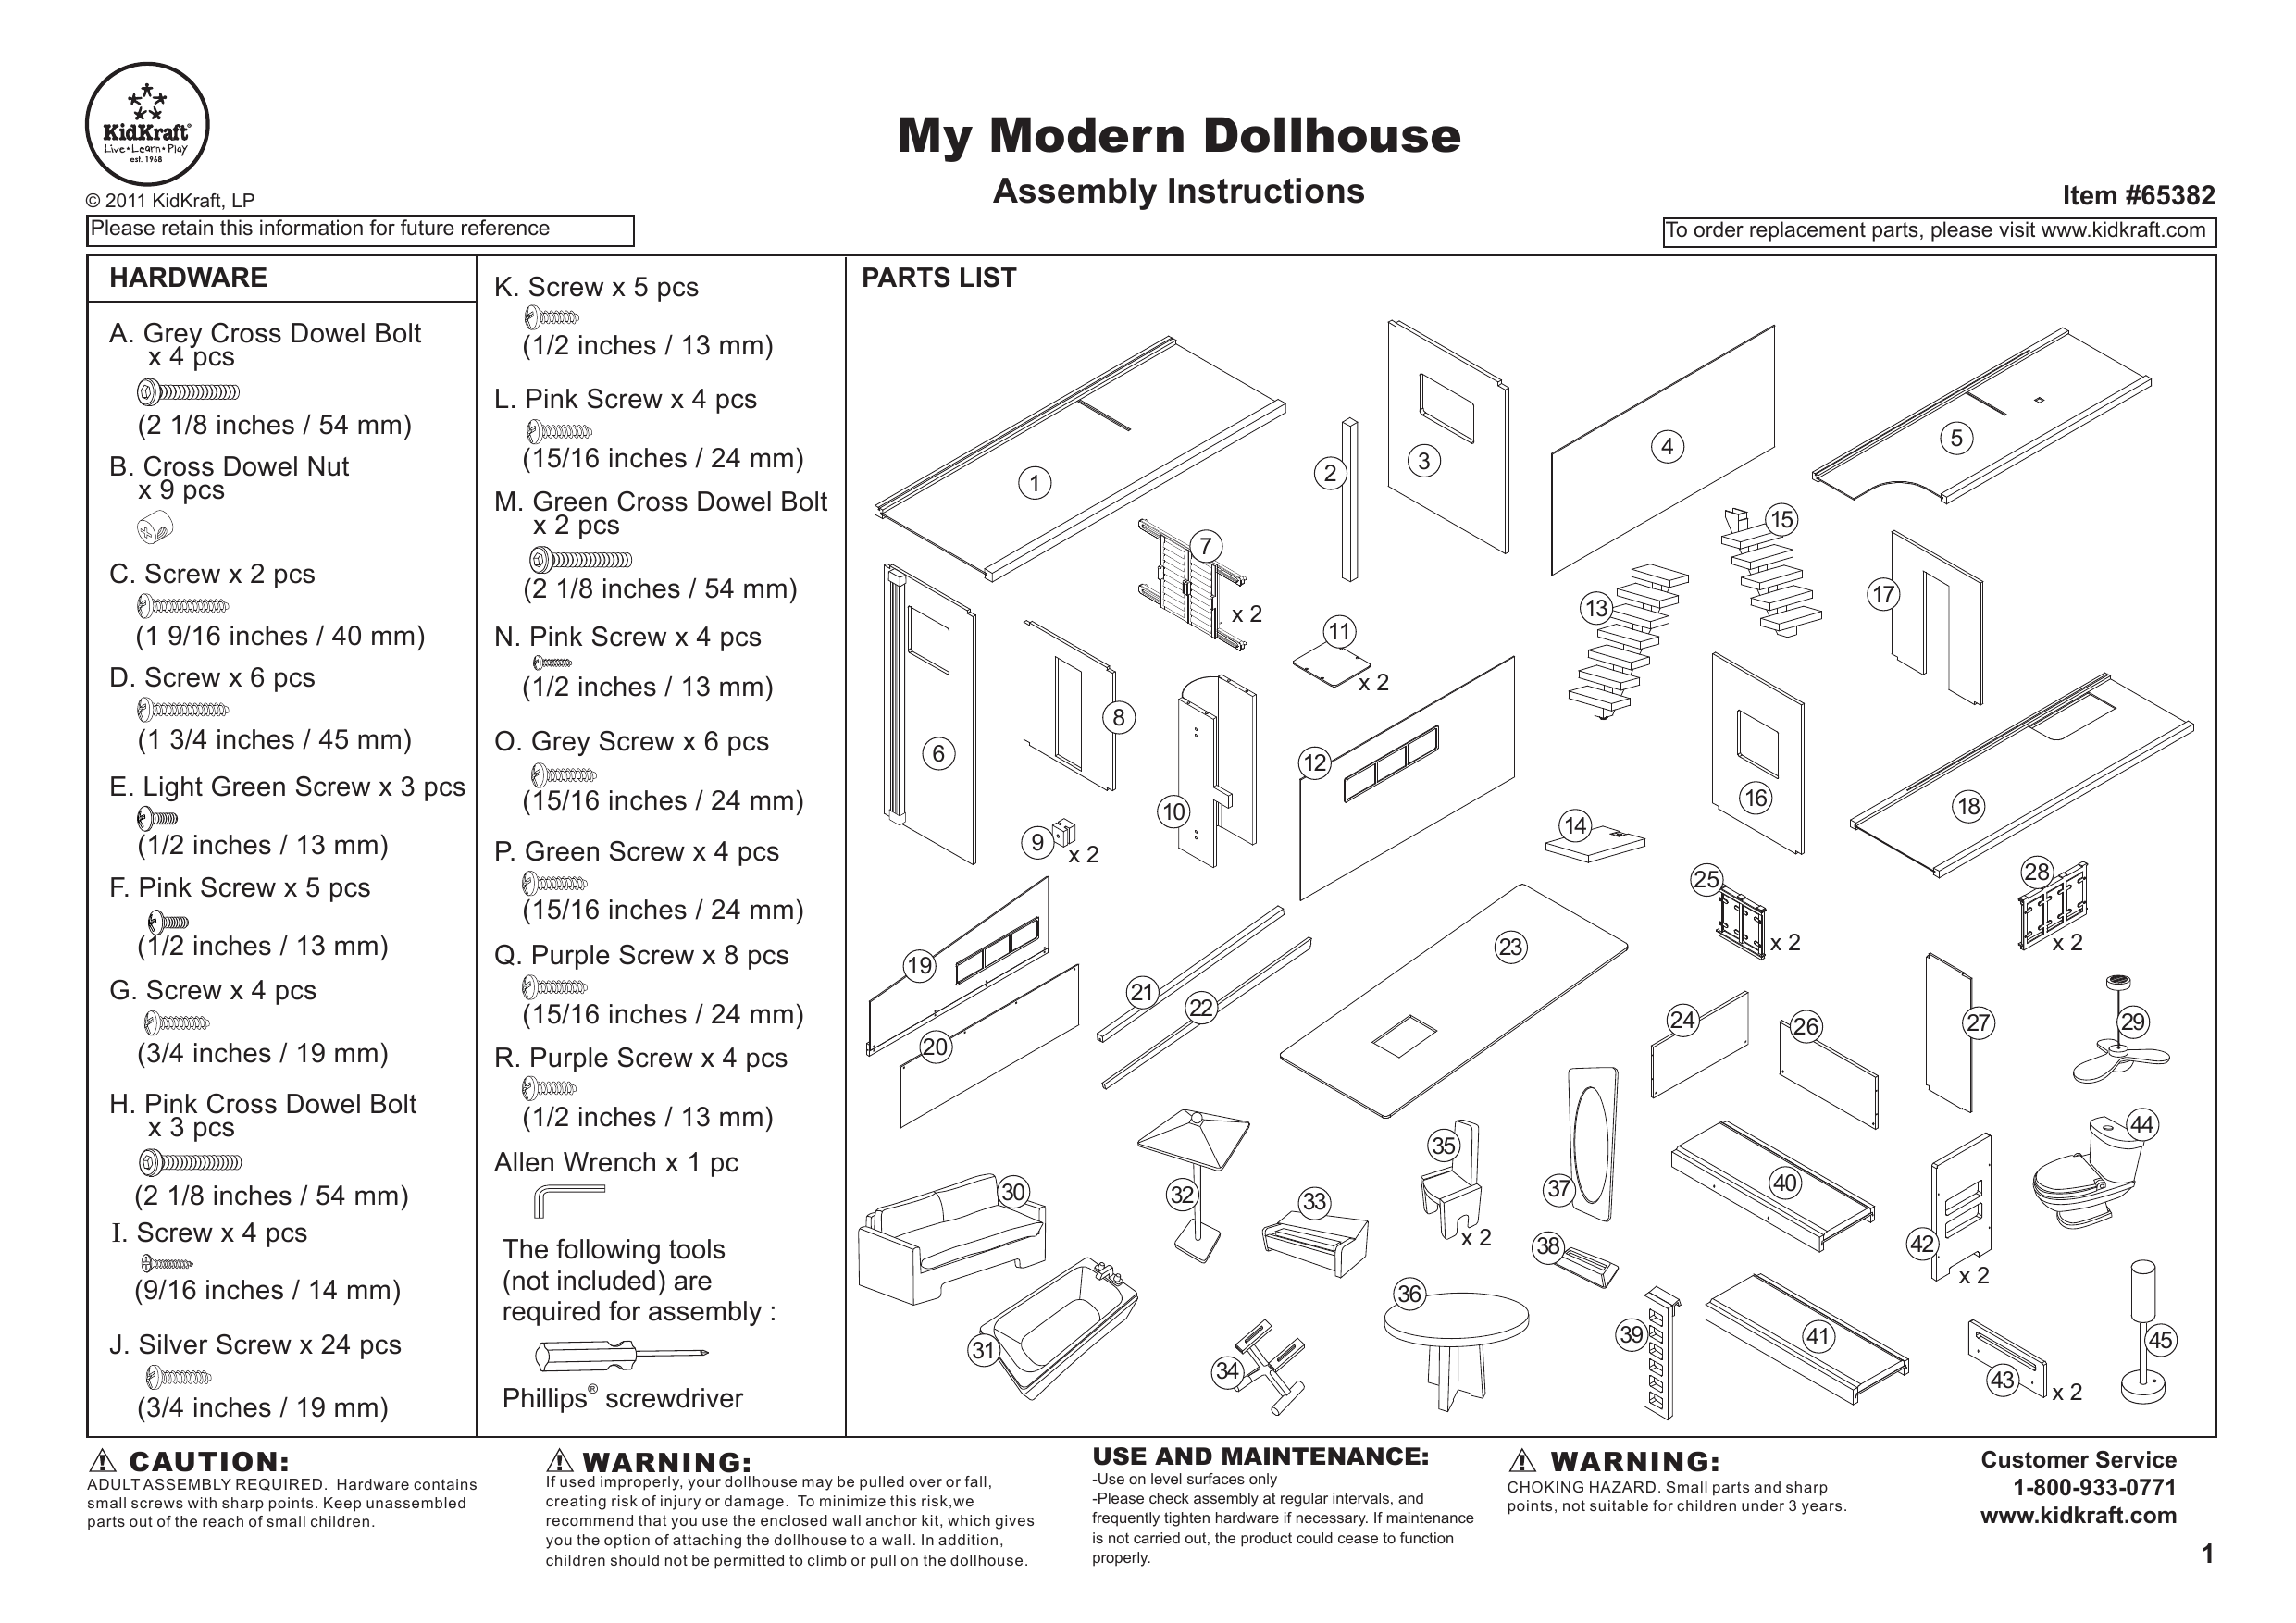 Kidkraft KidKraft My Dreamy Dollhouse assembly instruction manual booklet 